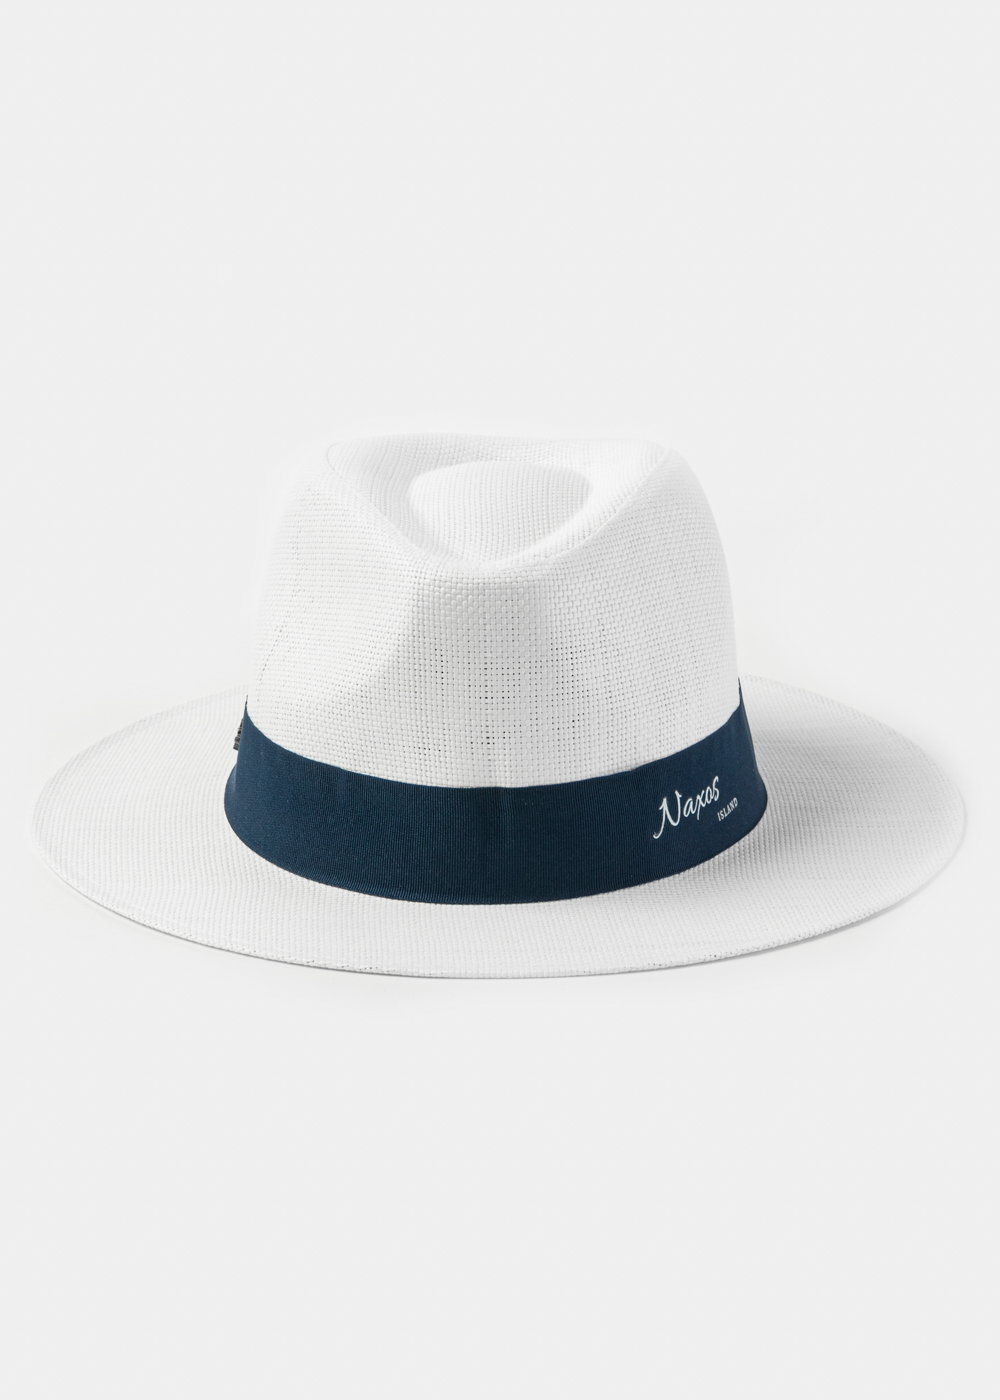 White "Naxos" Panama Hat